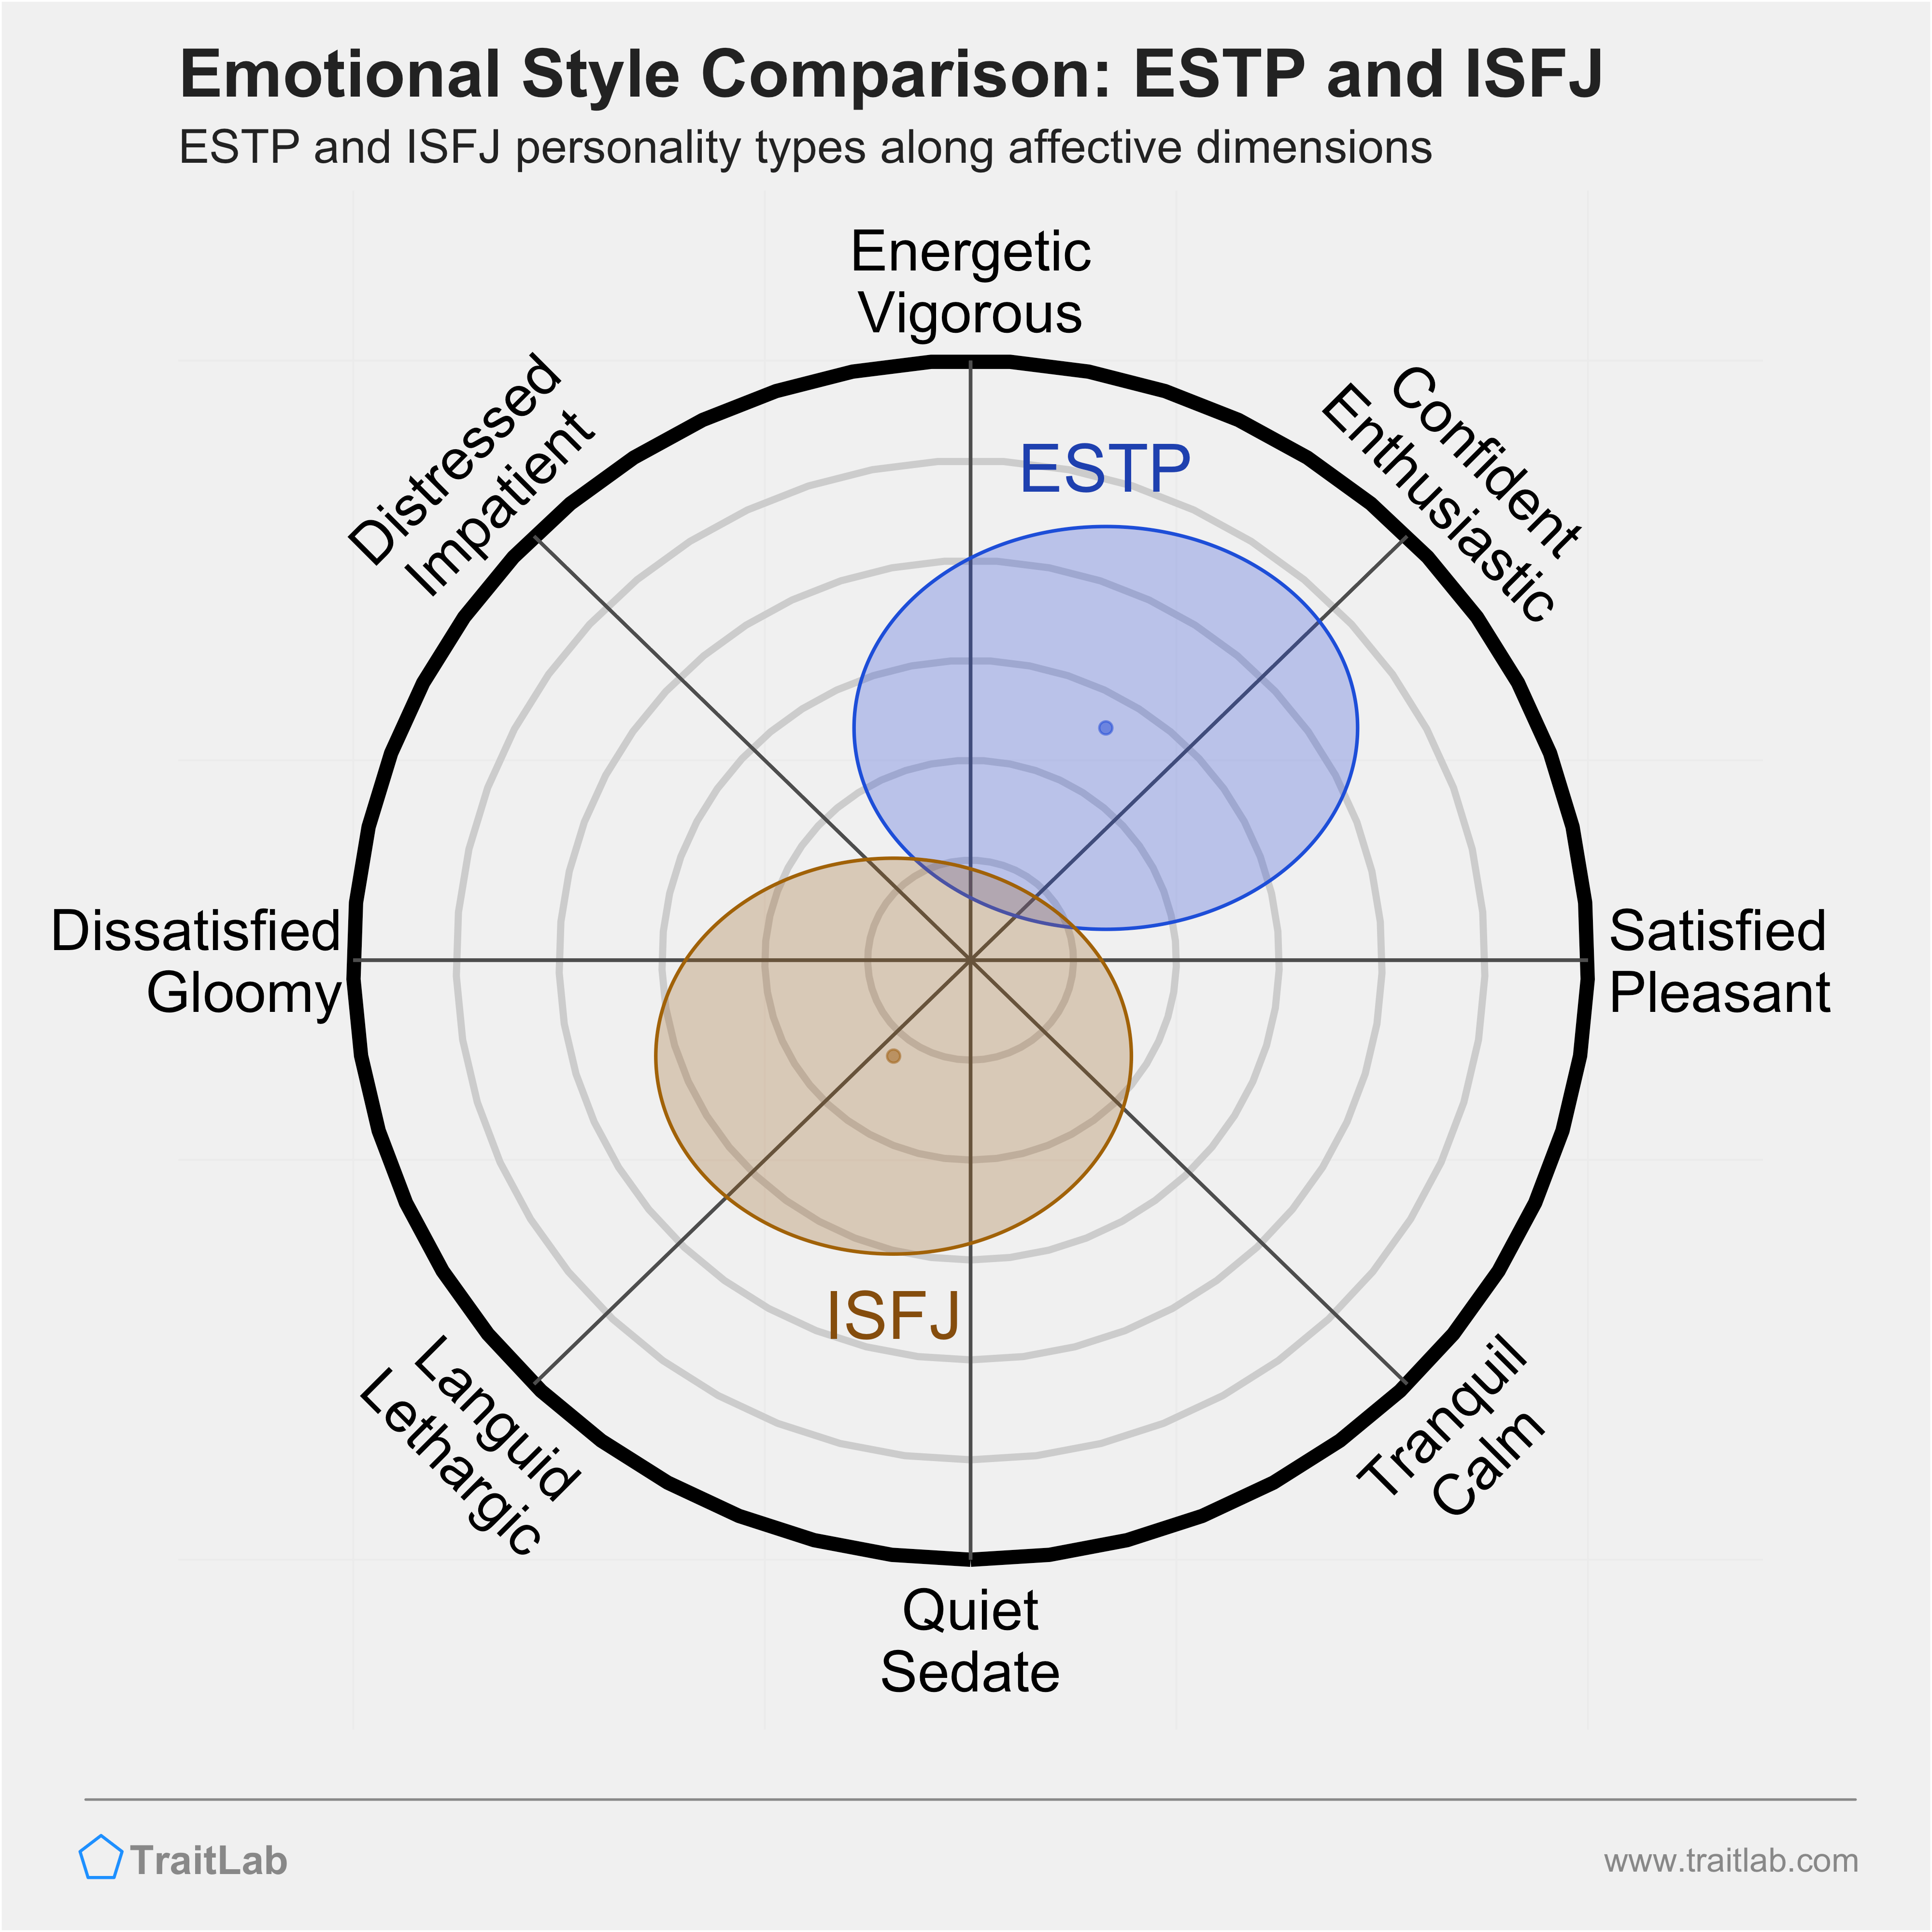 ESTP and ISFJ comparison across emotional (affective) dimensions